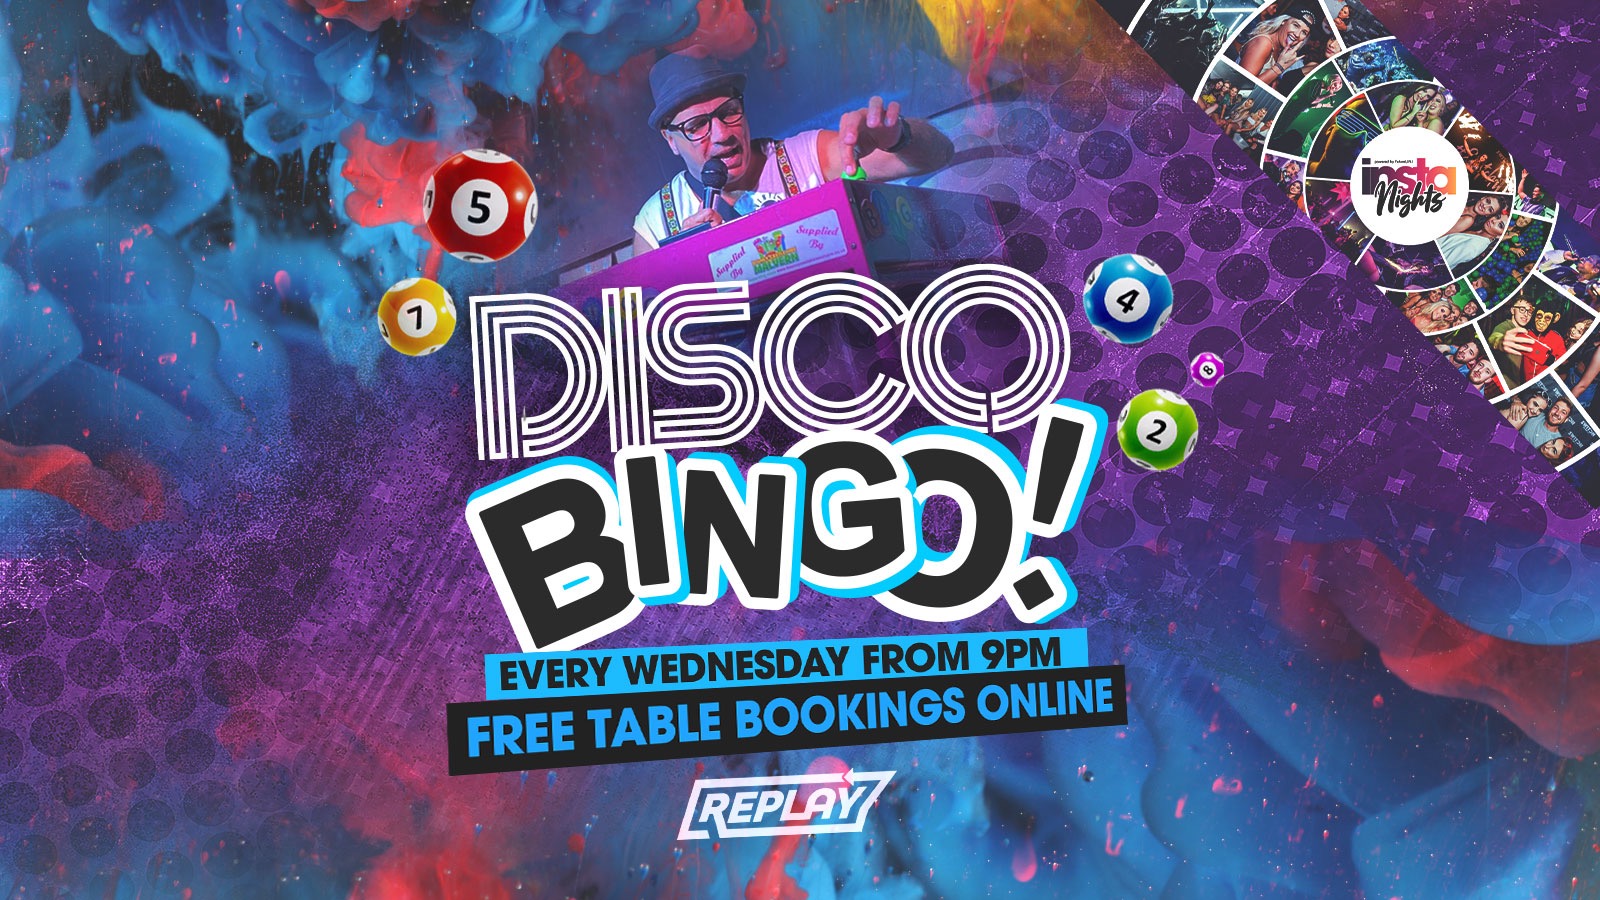 Disco Nights Bingo